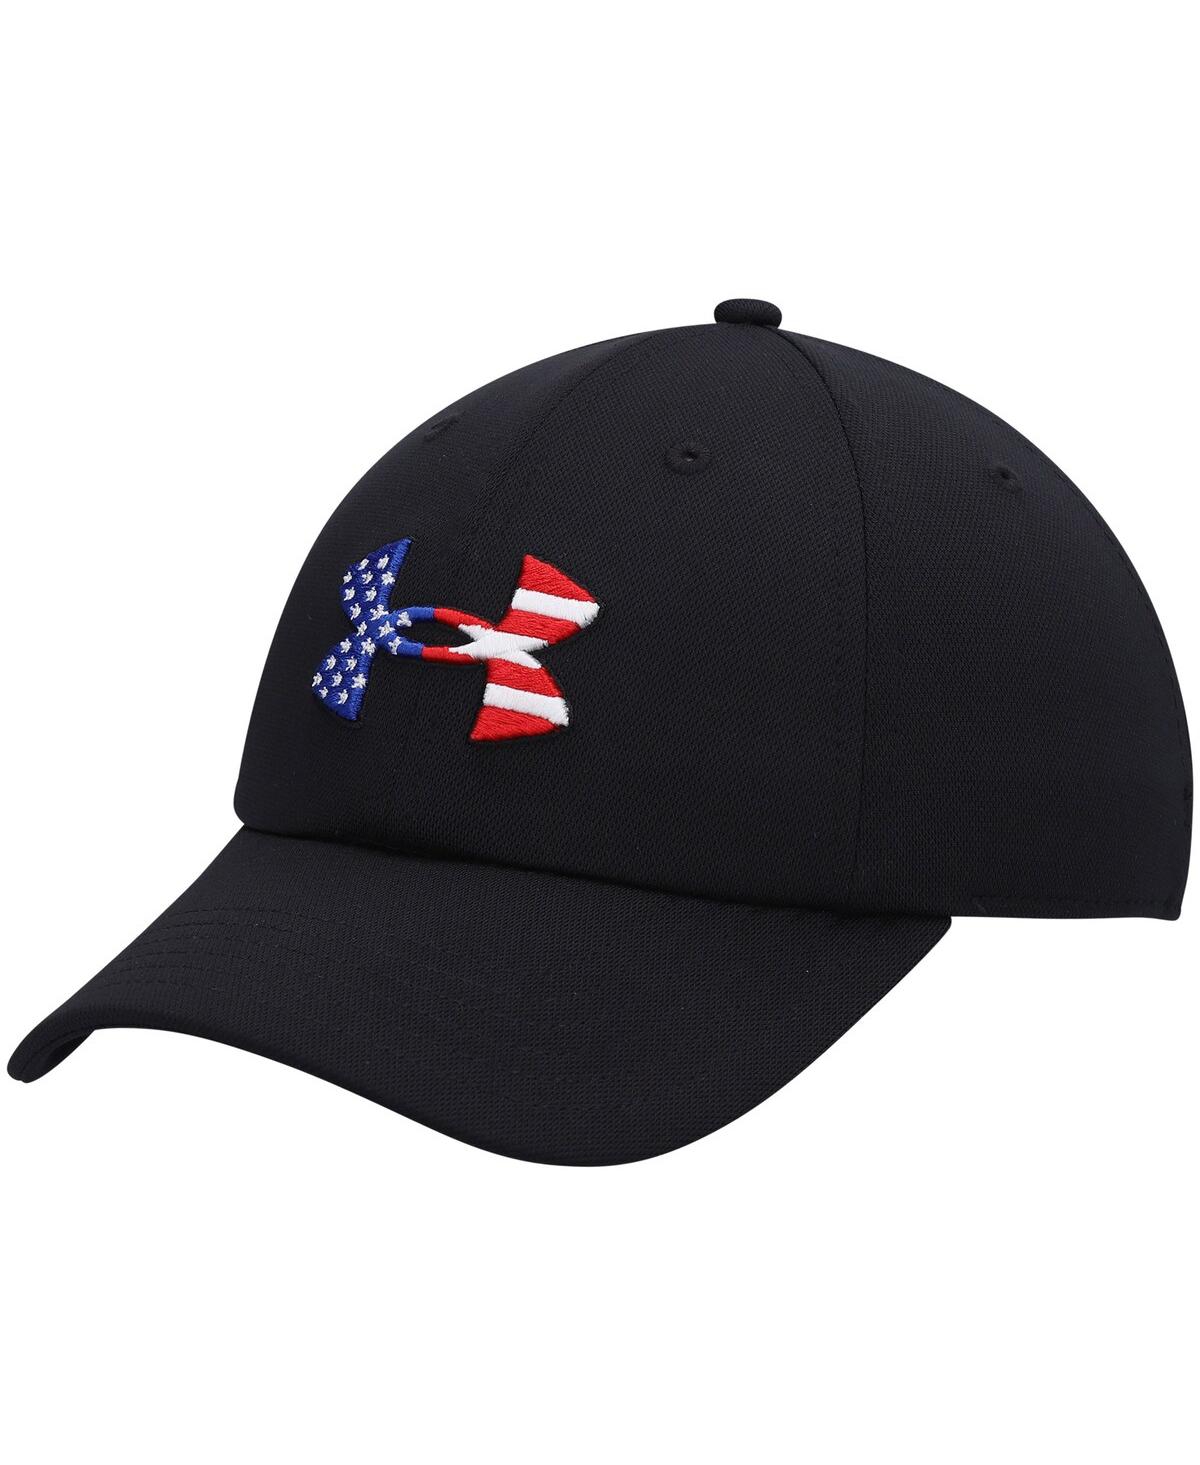 Men's Under Armour Graphite Freedom Blitzing Adjustable Hat - Graphite